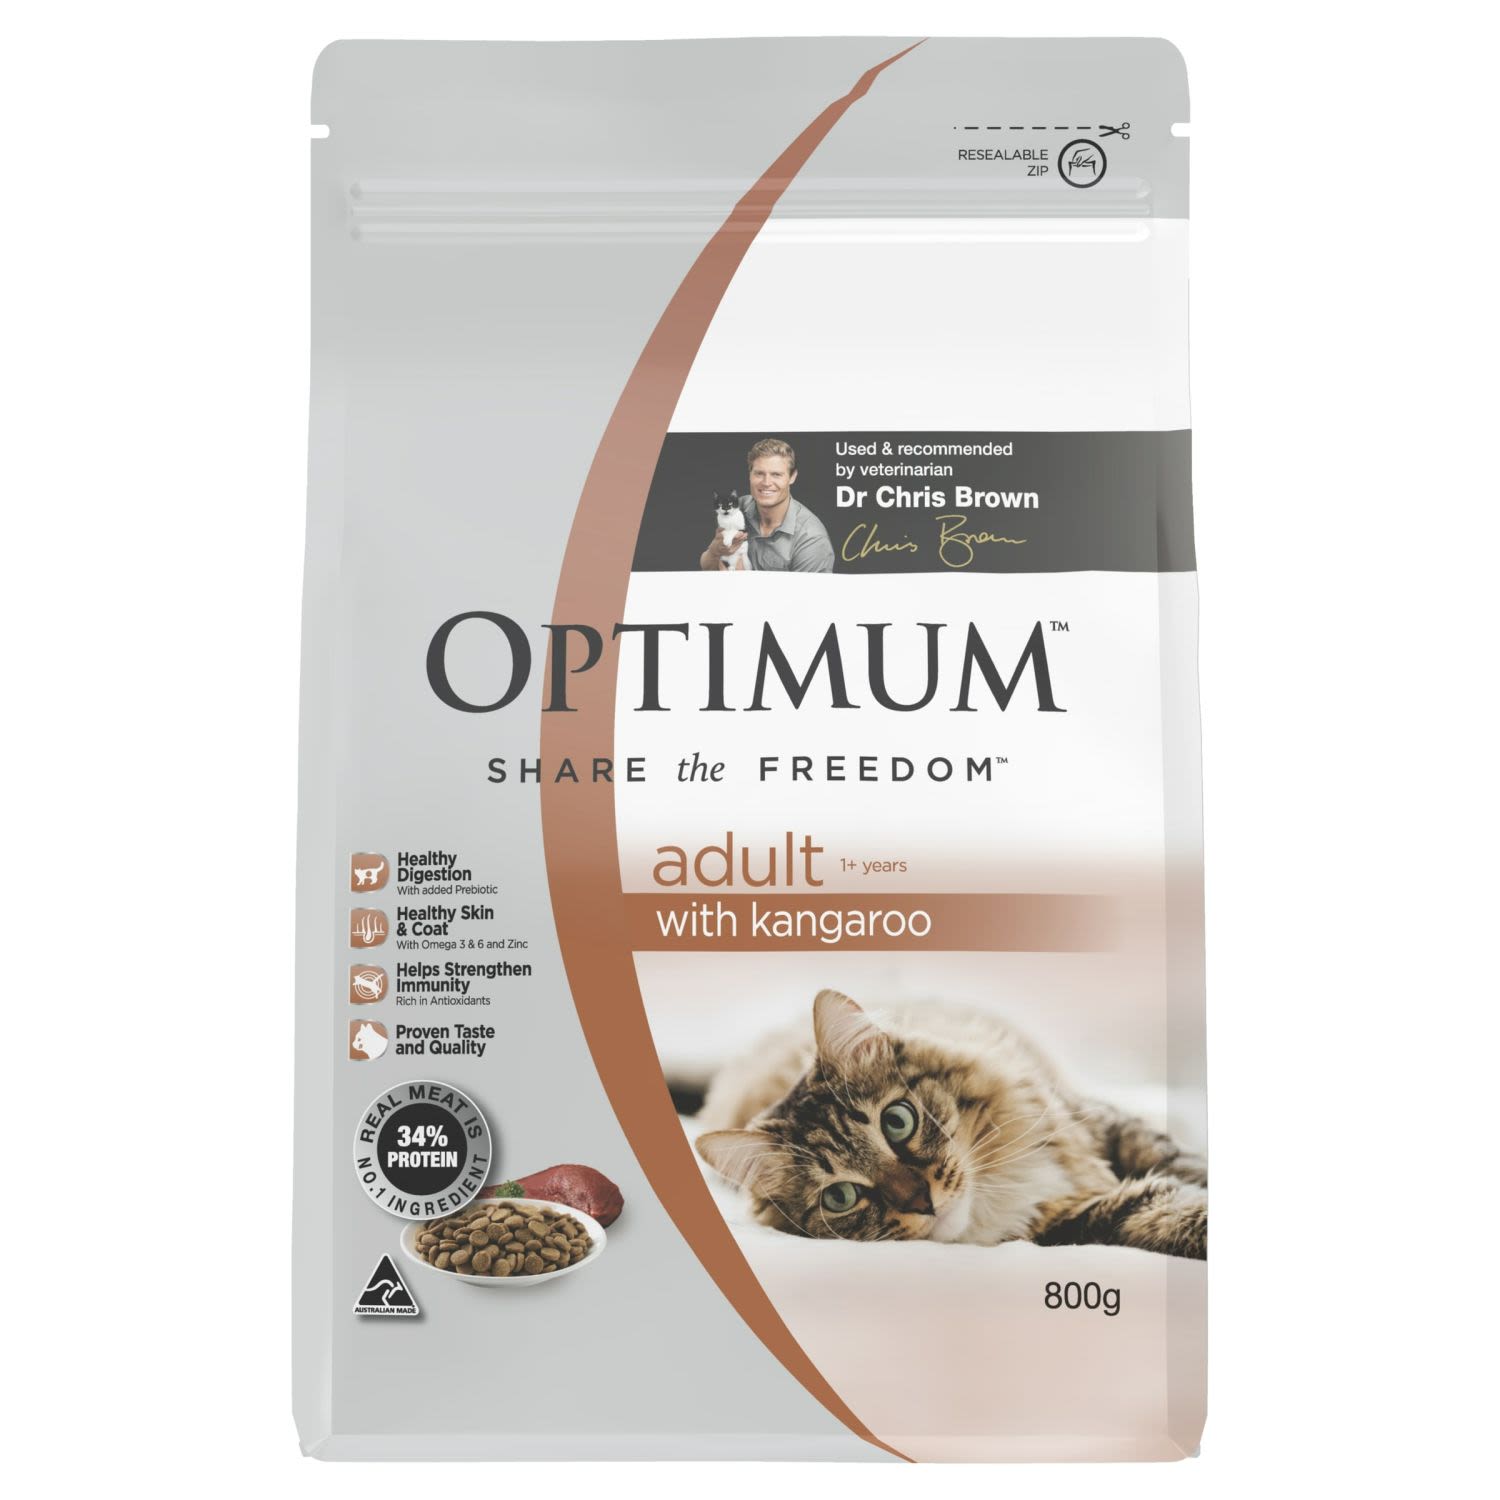 Optimum Dry Cat Food Adult 1+ years with Kangaroo, 800 Gram